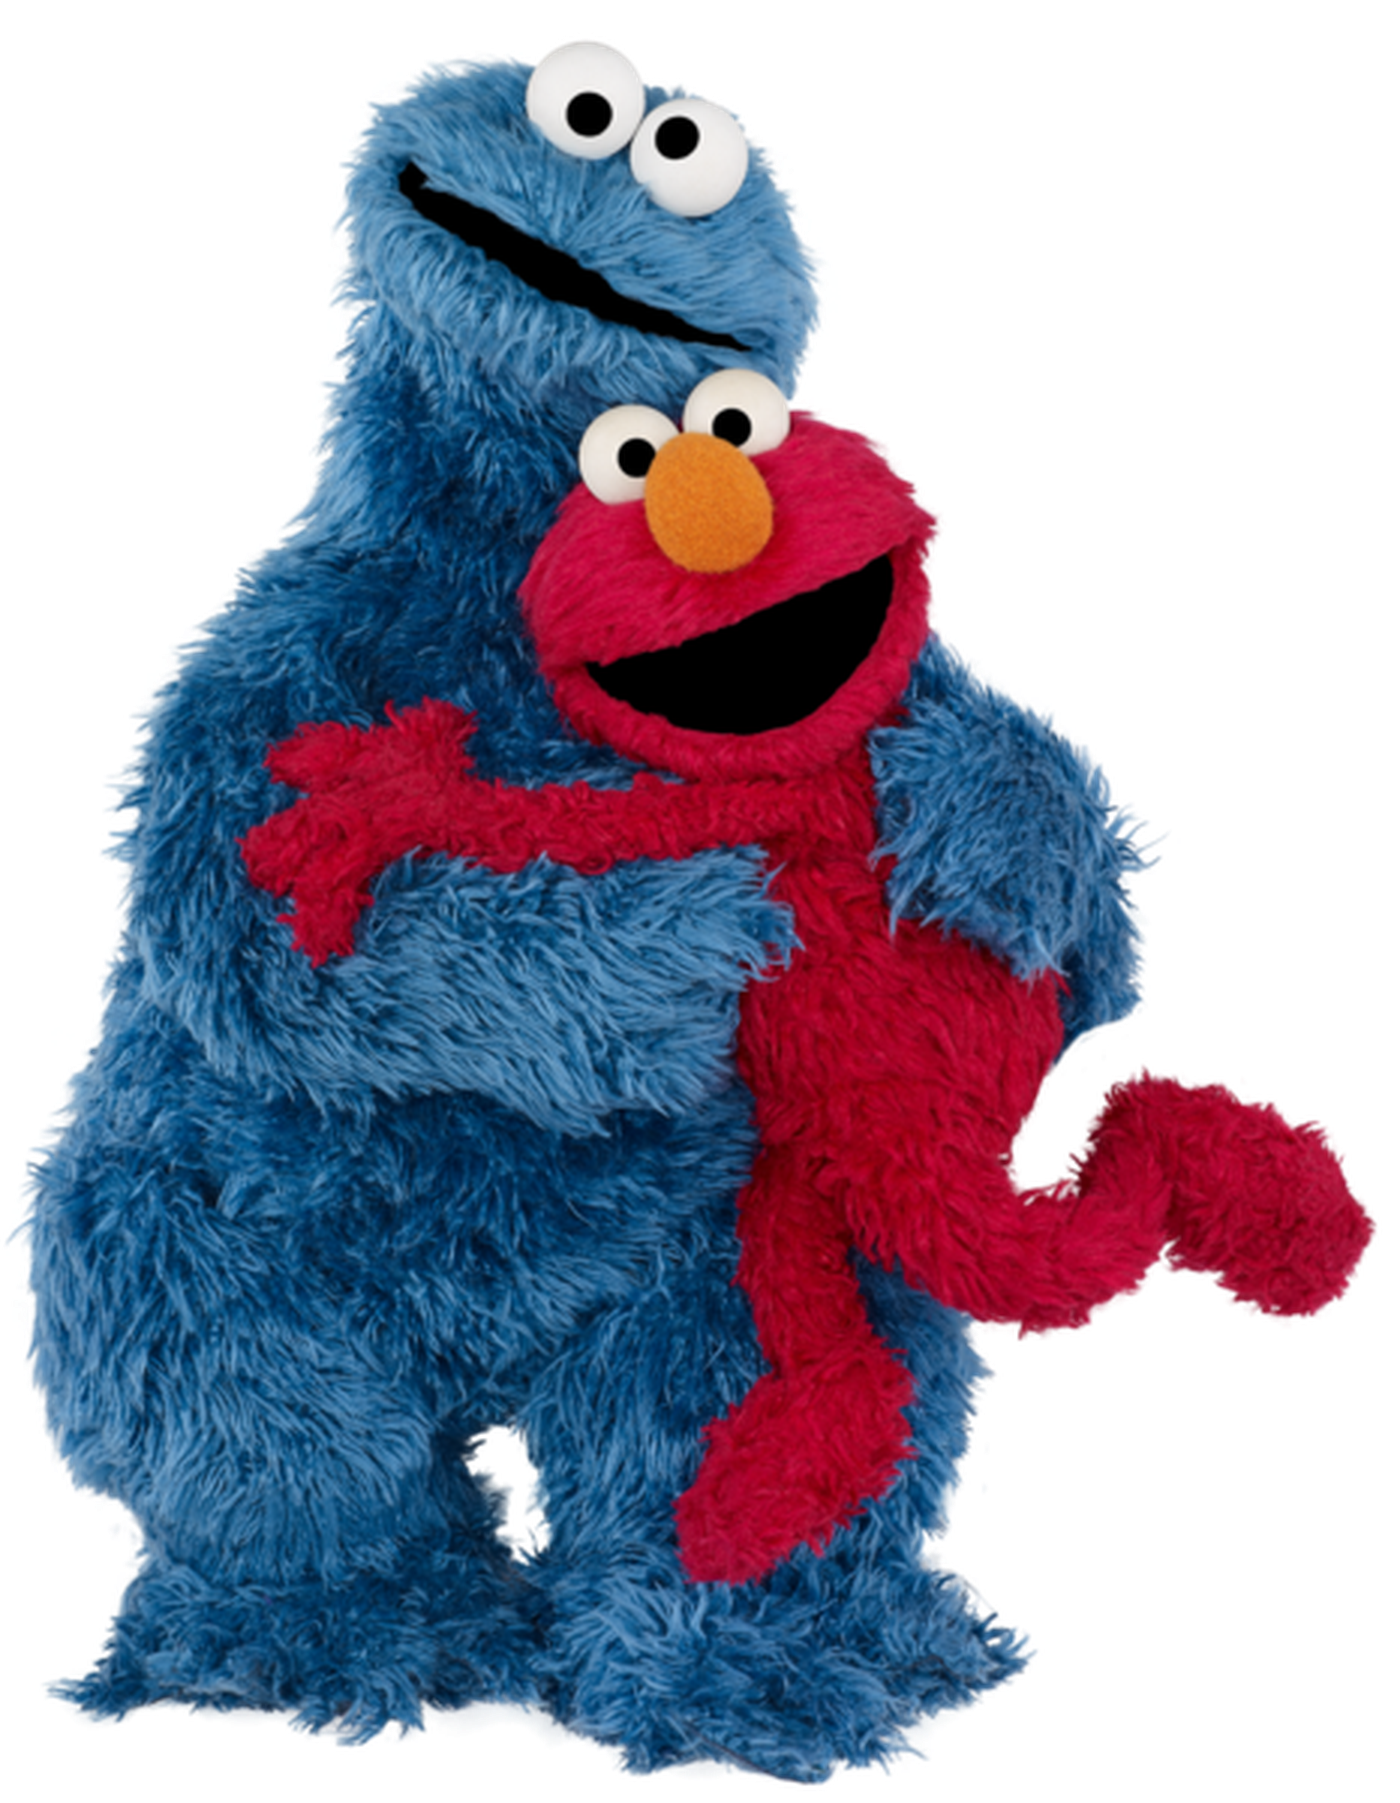 Elmo, Cookie Monster to star in new U.K. children's show 'Furchester'